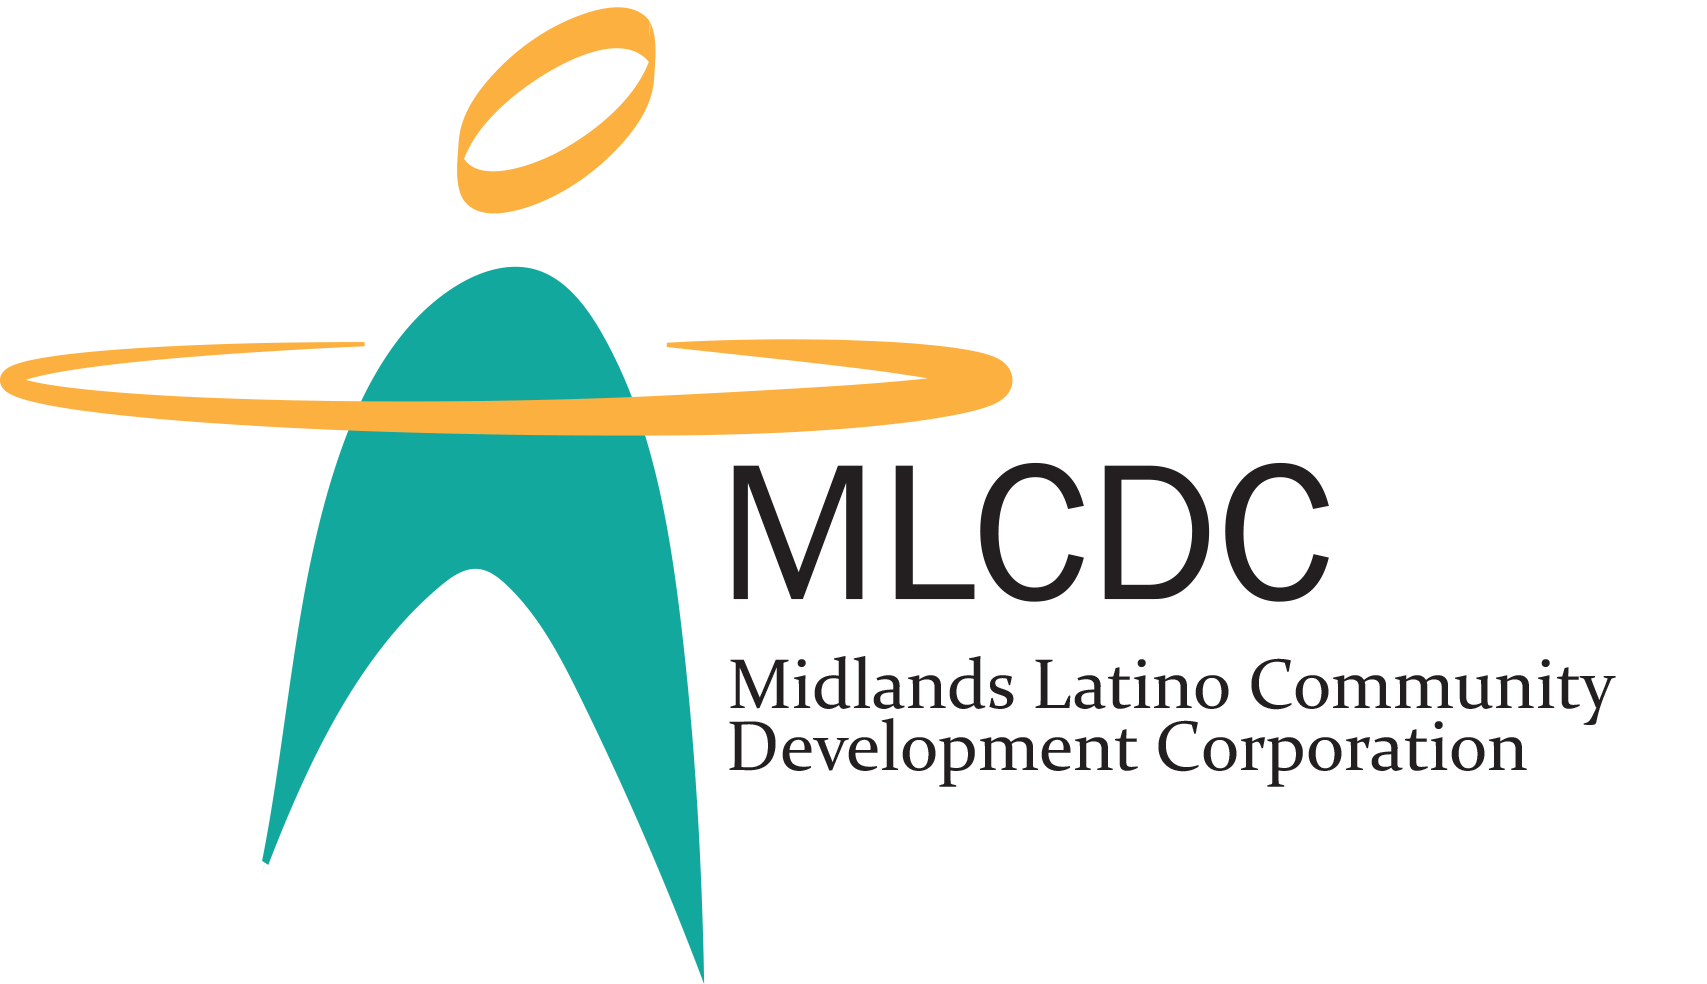 MLCDC logo green and yellow